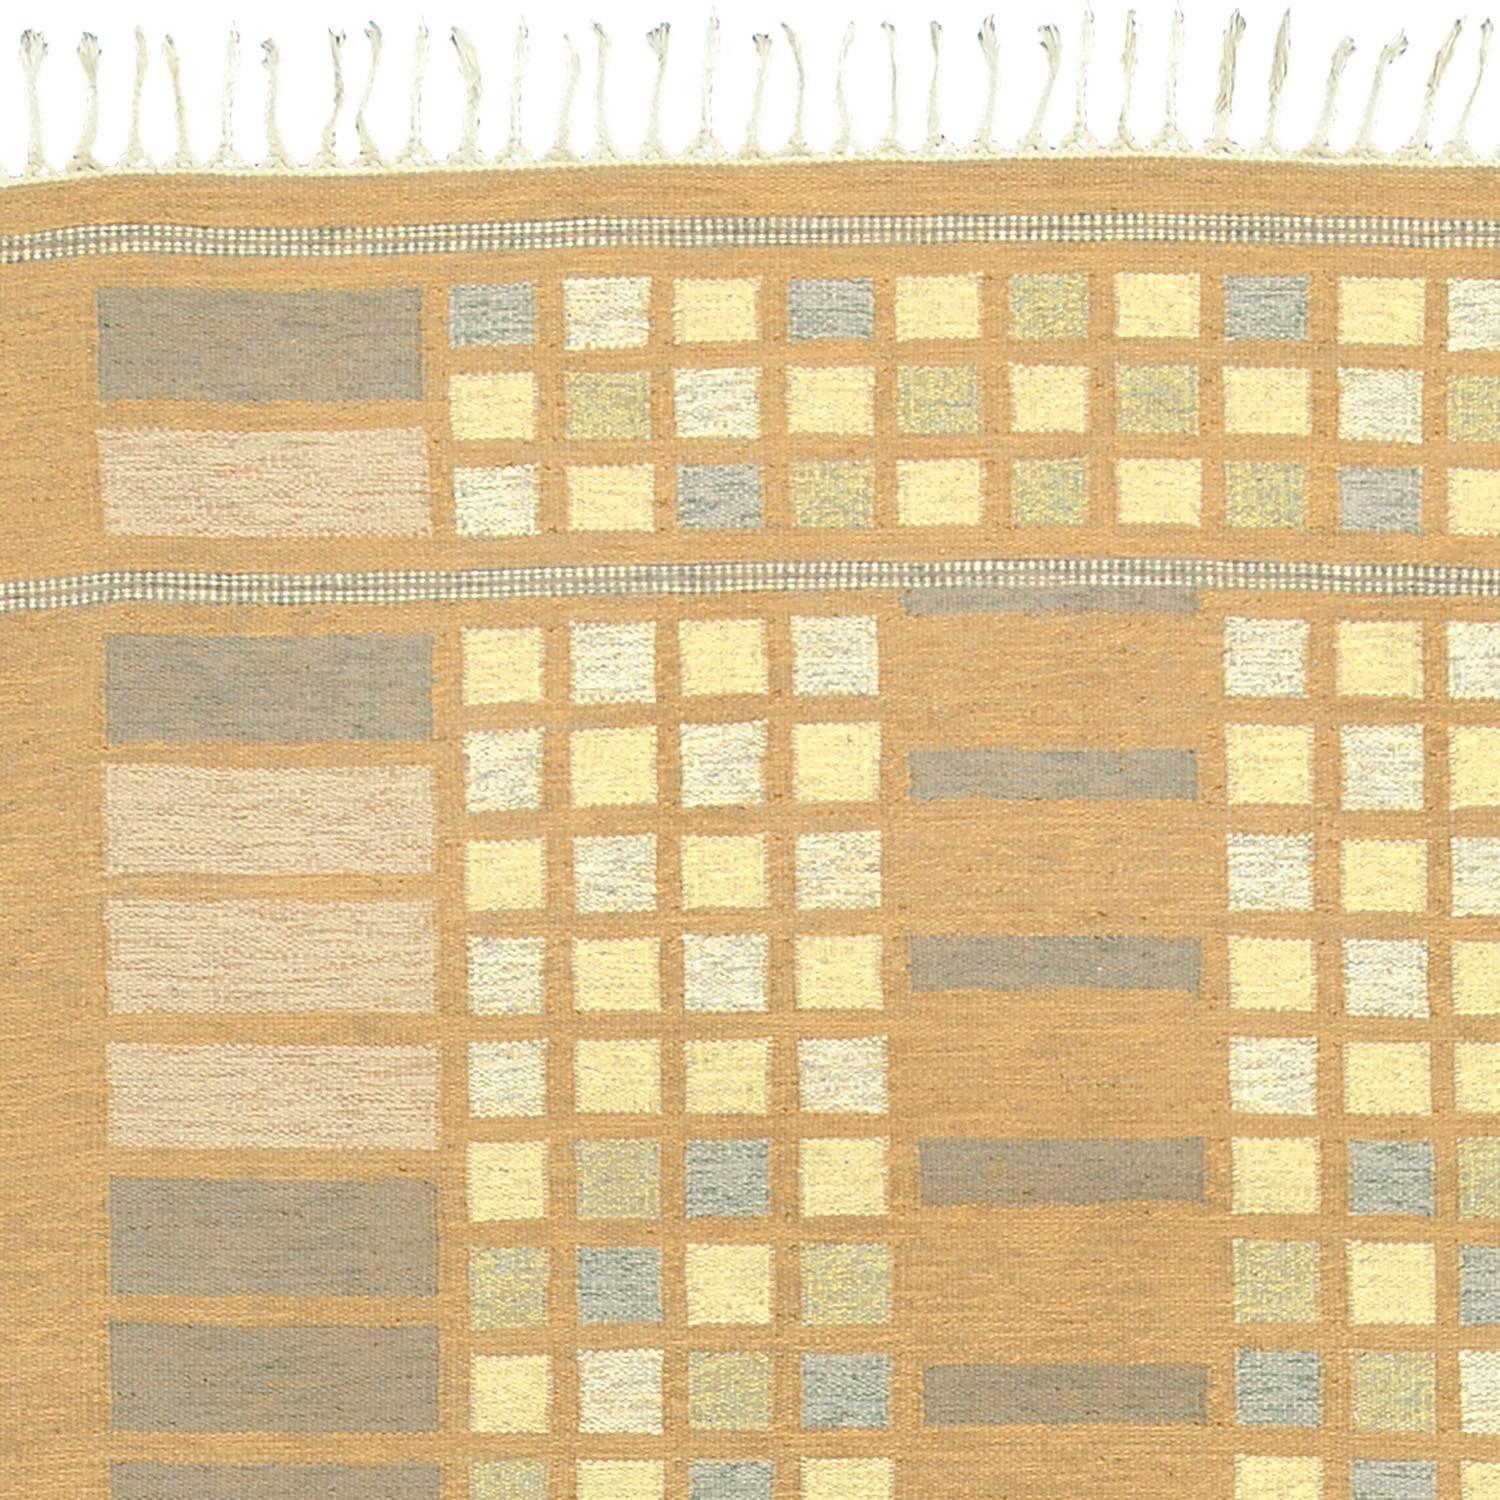 Mid-20th century Swedish flat-weave carpet, Initialed 